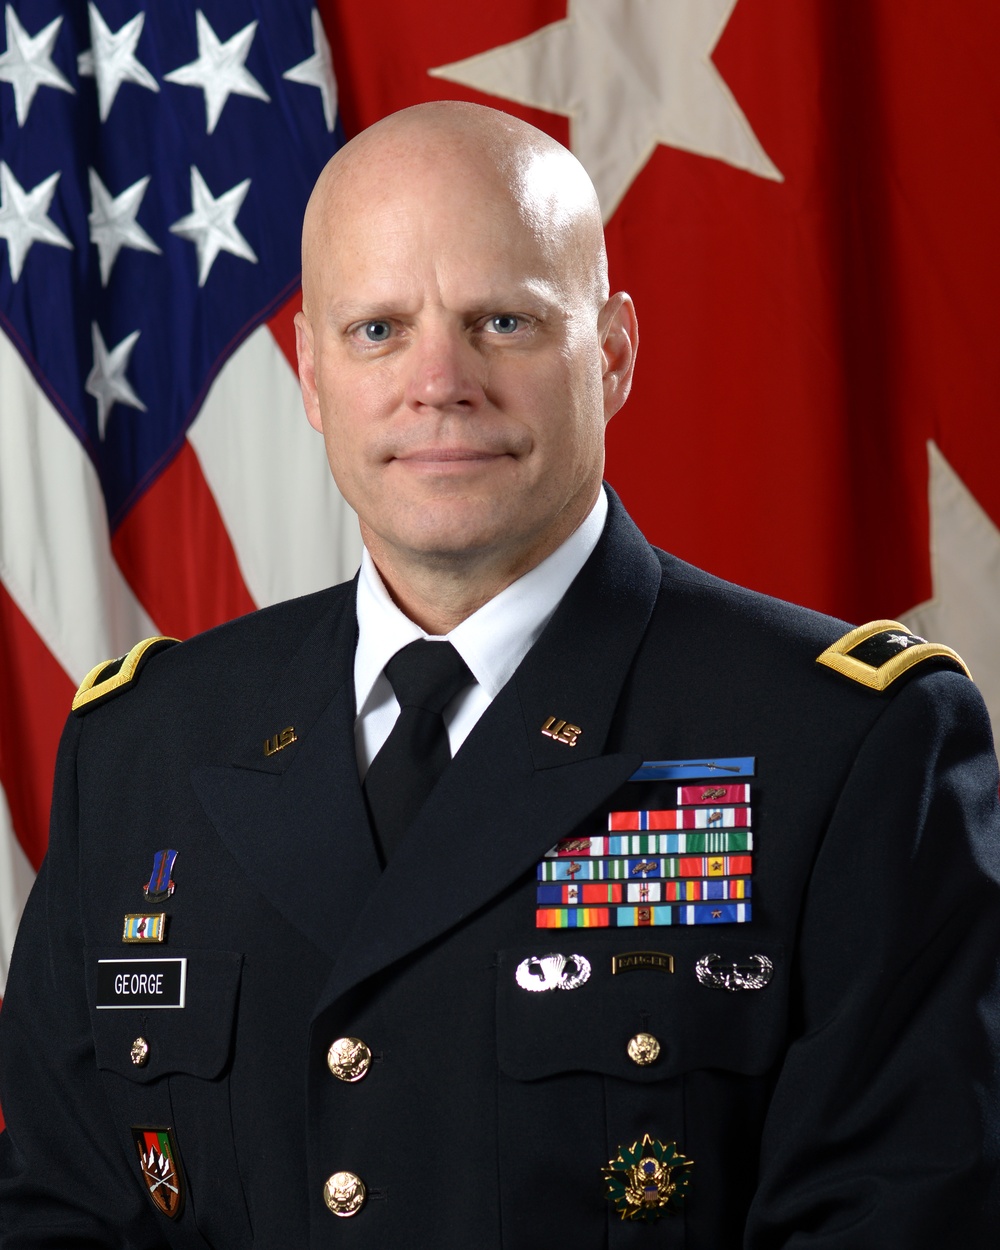 Maj. Gen. John George